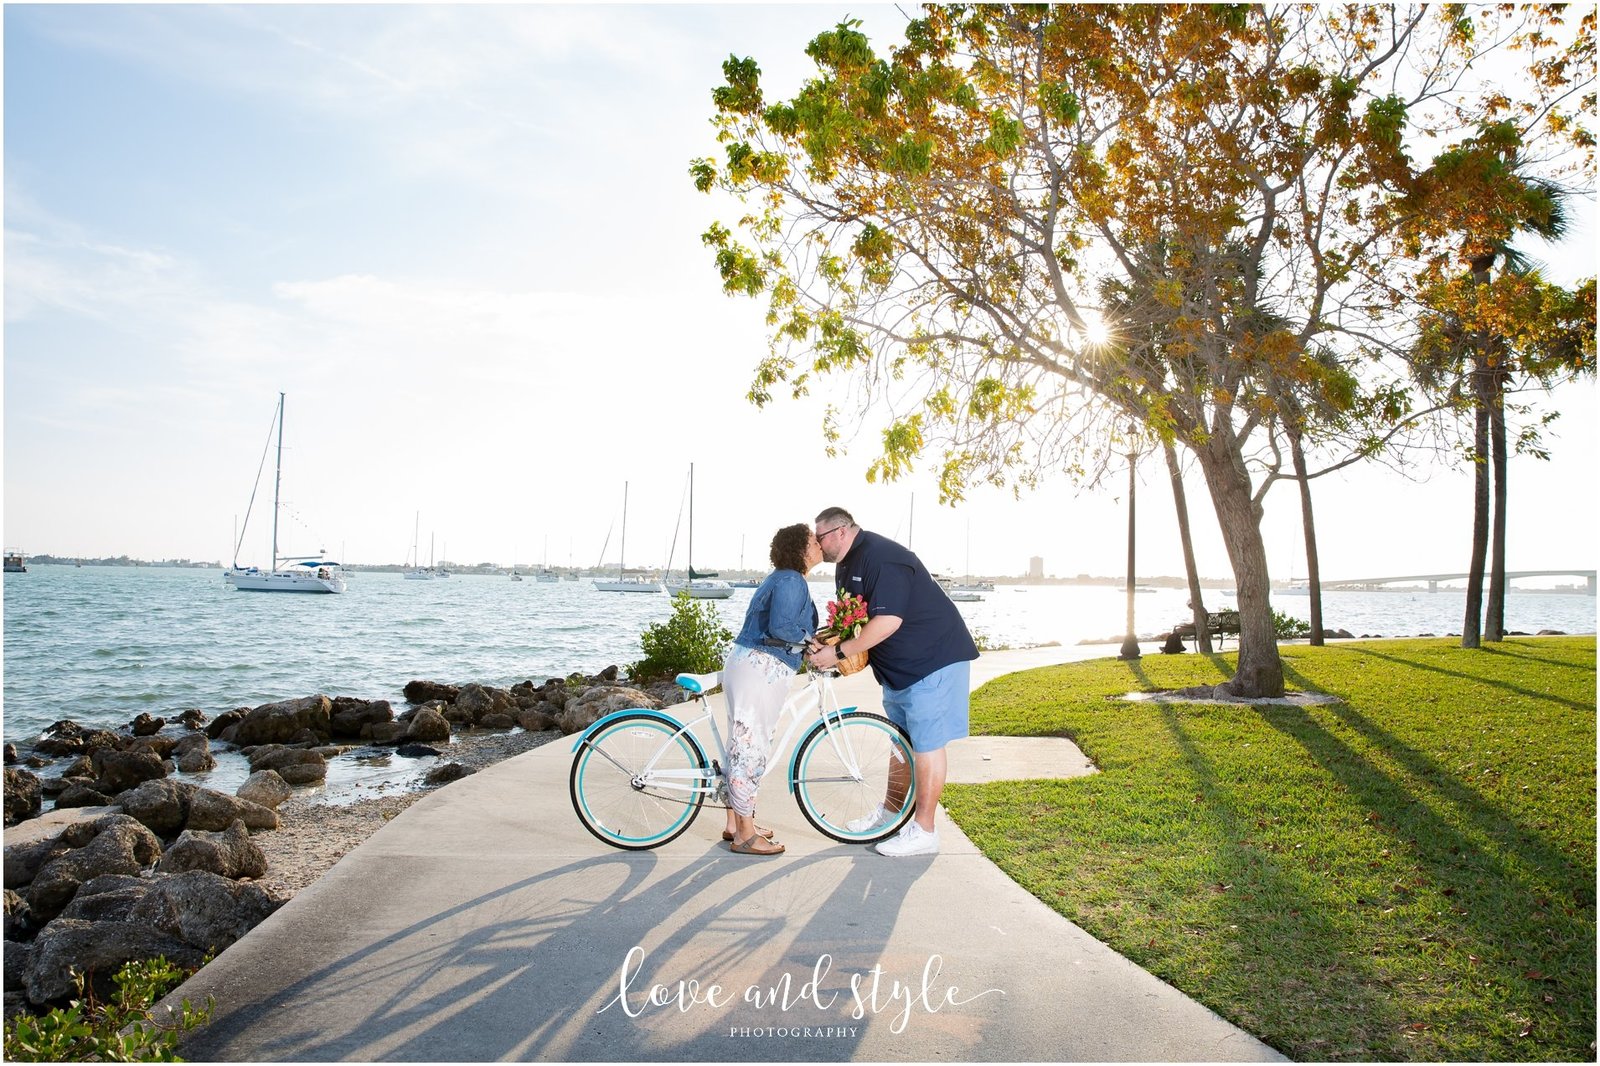 Engagement Photography at Bayfront Park, Sarasota kissing with a bike